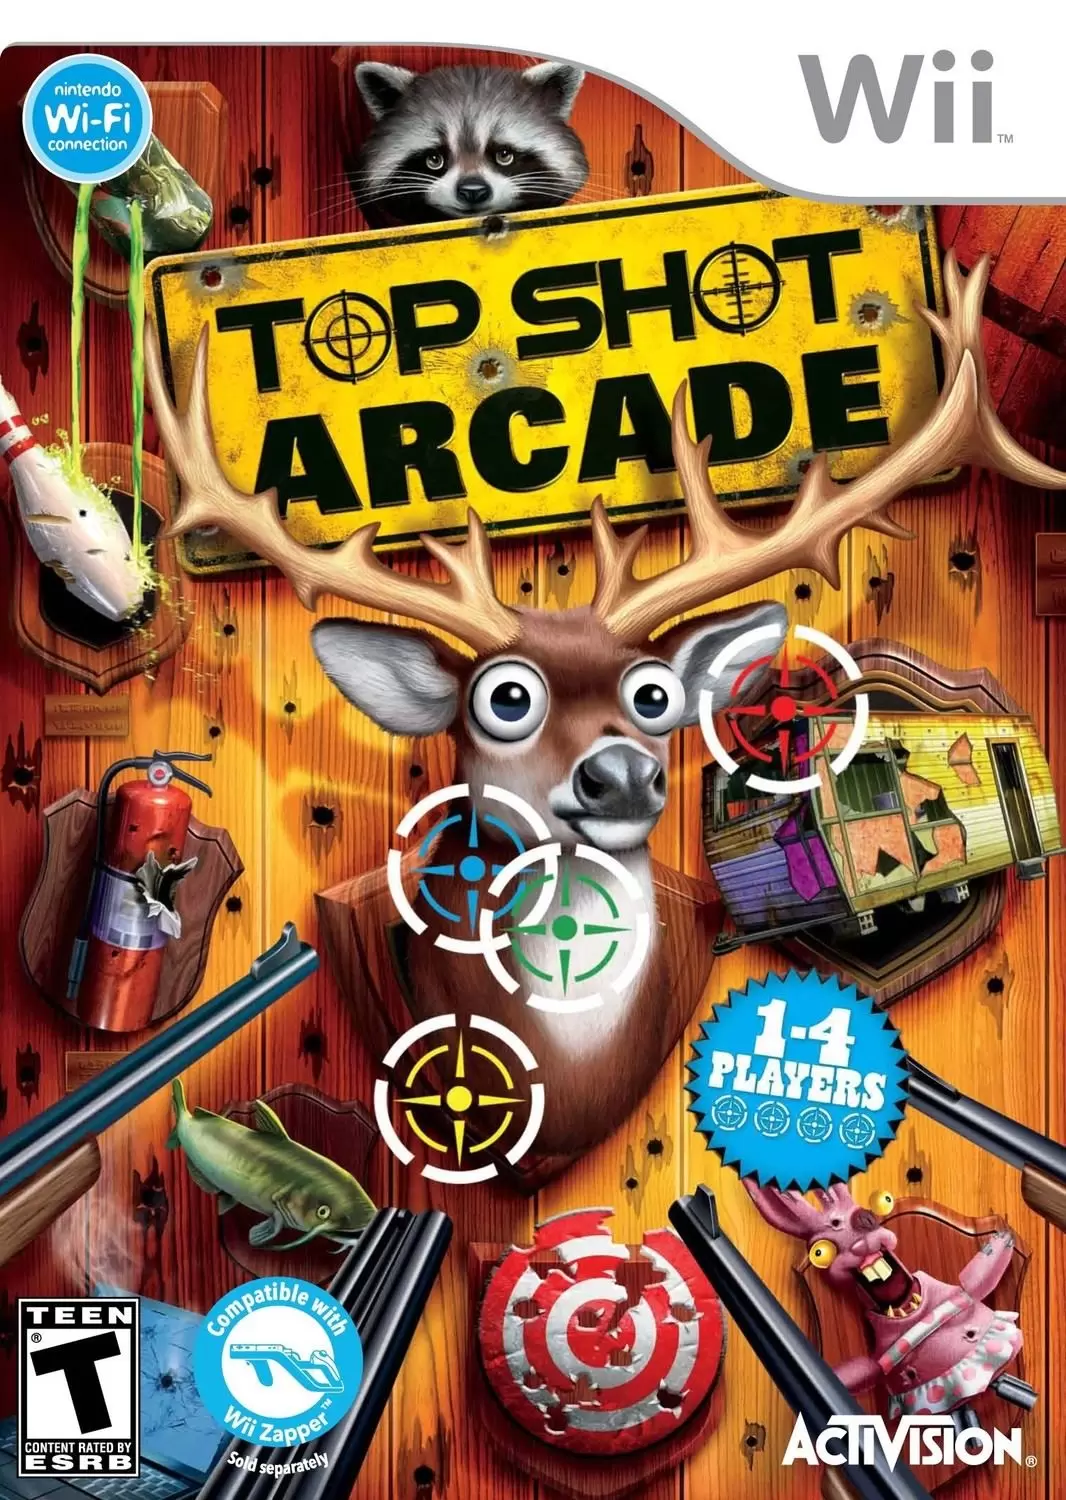 Nintendo Wii Games - Top Shot Arcade